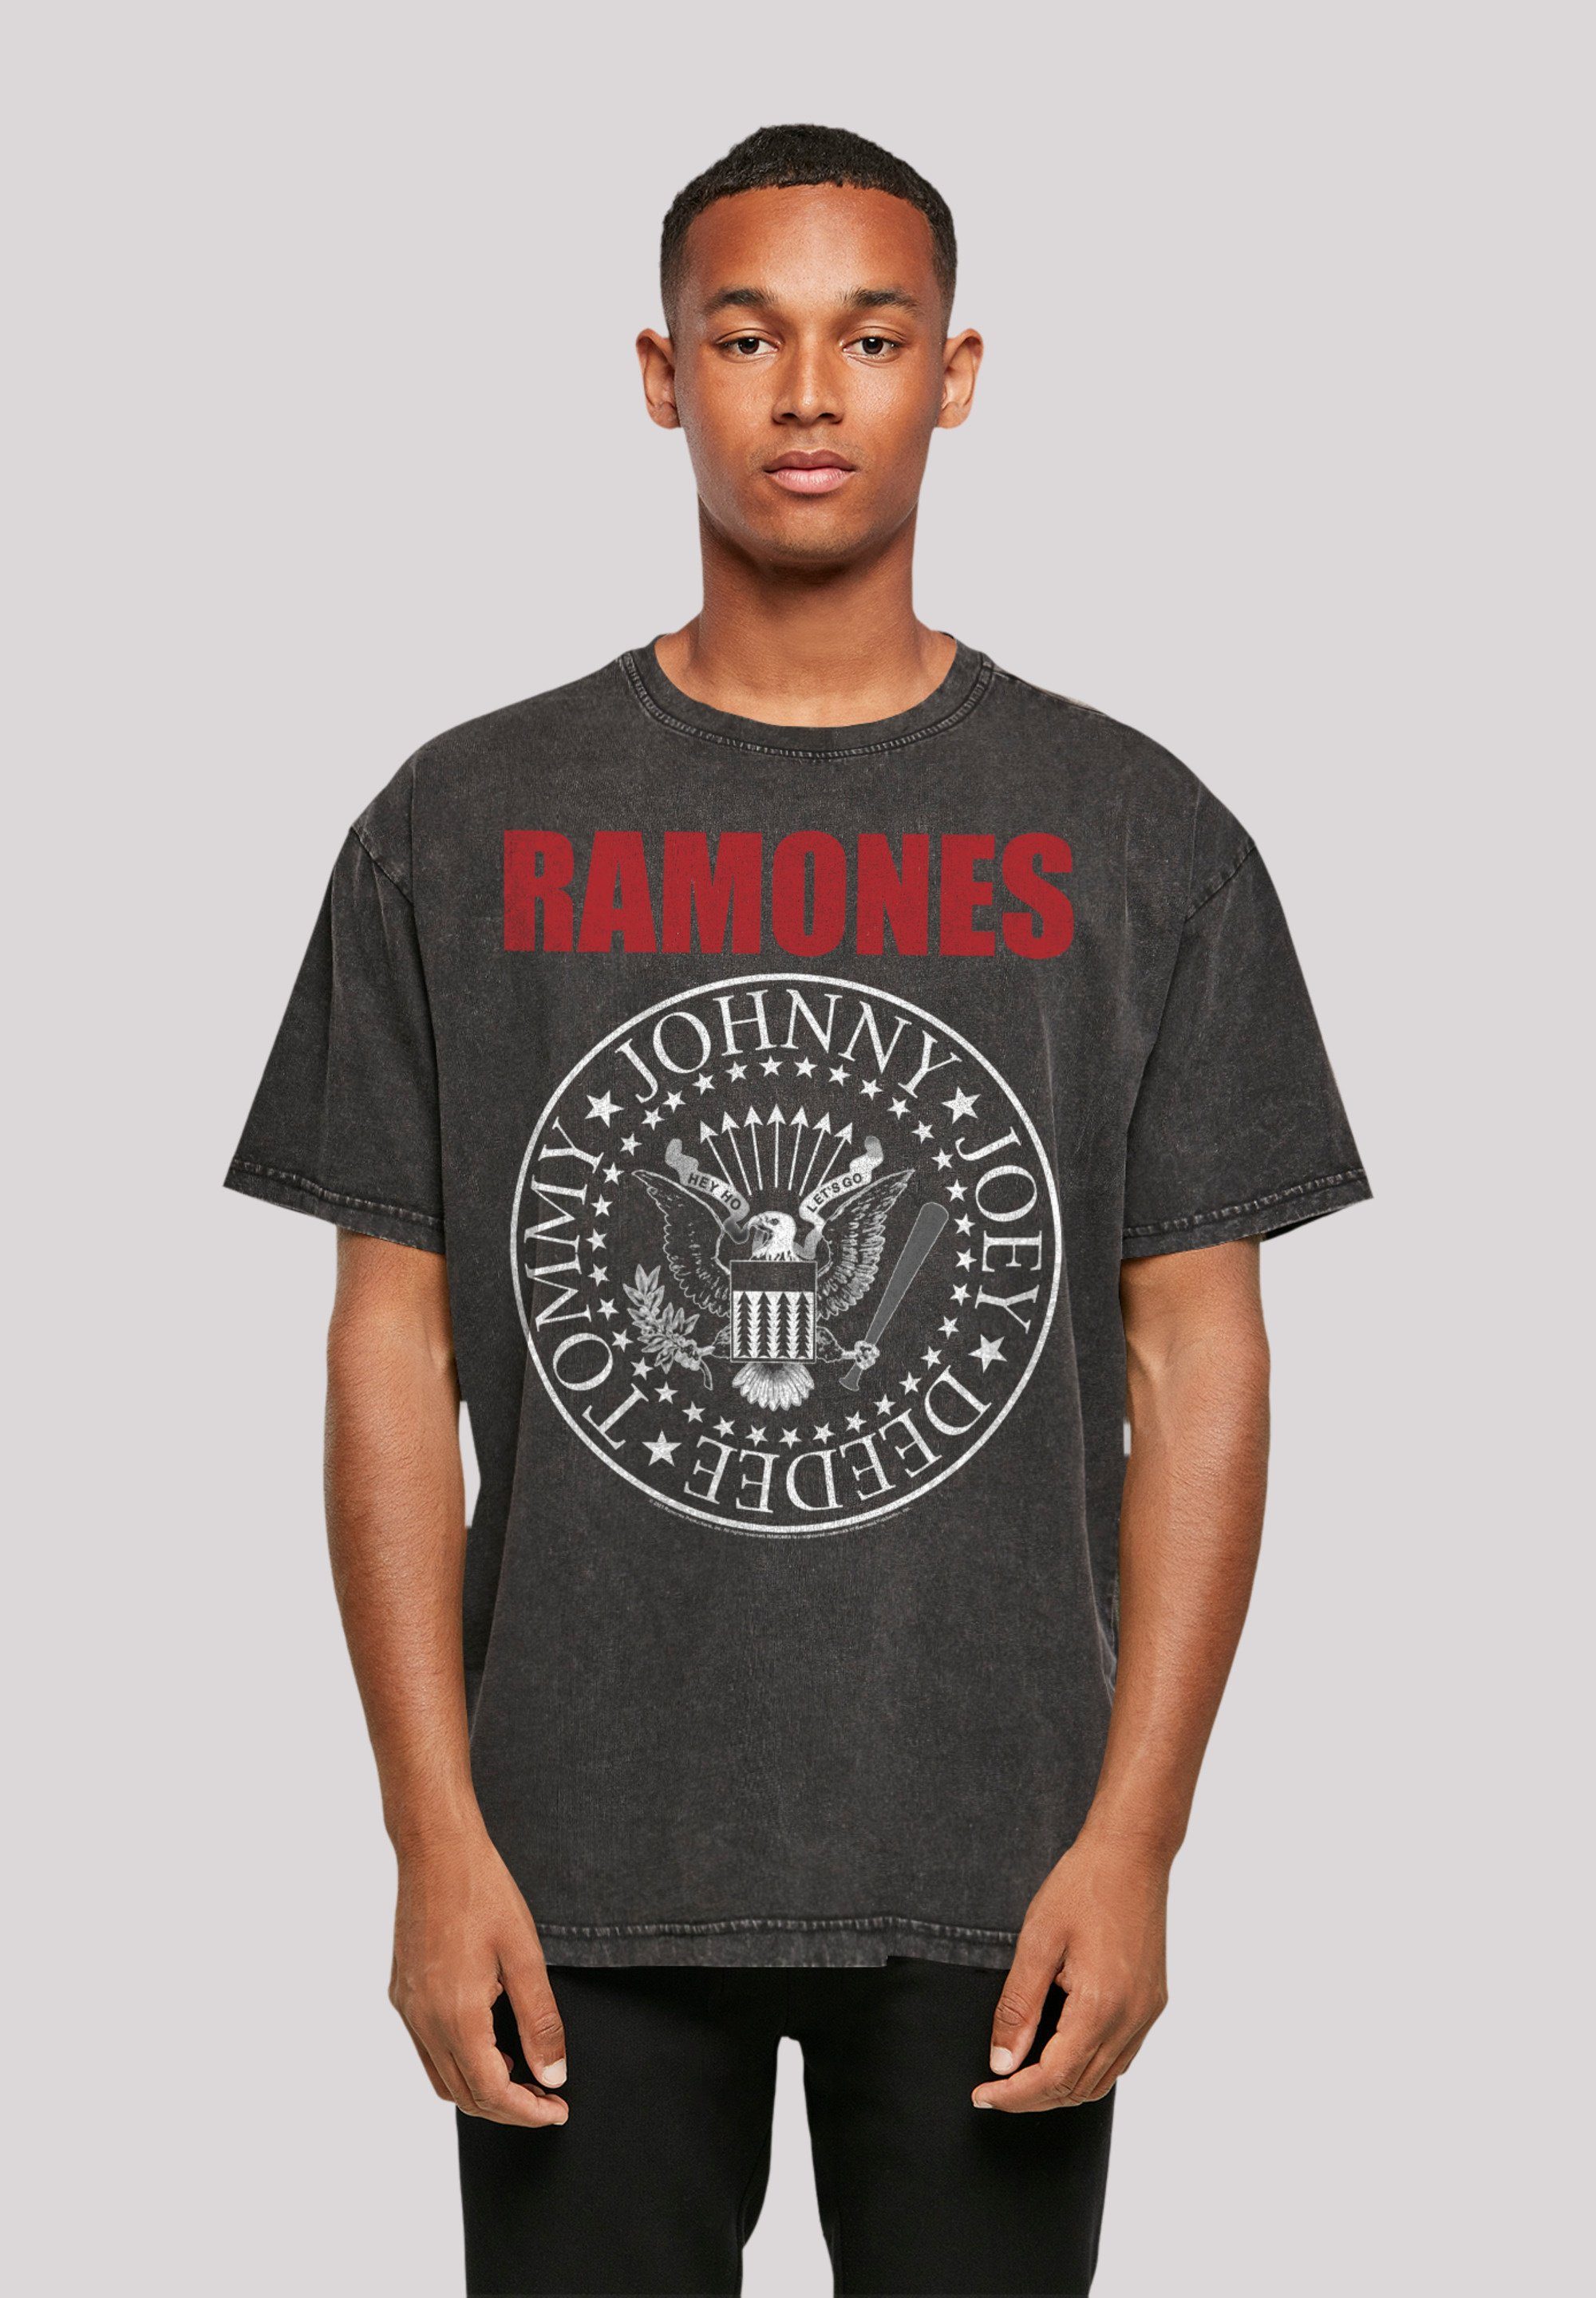 Premium Red Musik Rock Rock-Musik Seal Text F4NT4STIC Qualität, Ramones Band Band, T-Shirt schwarz